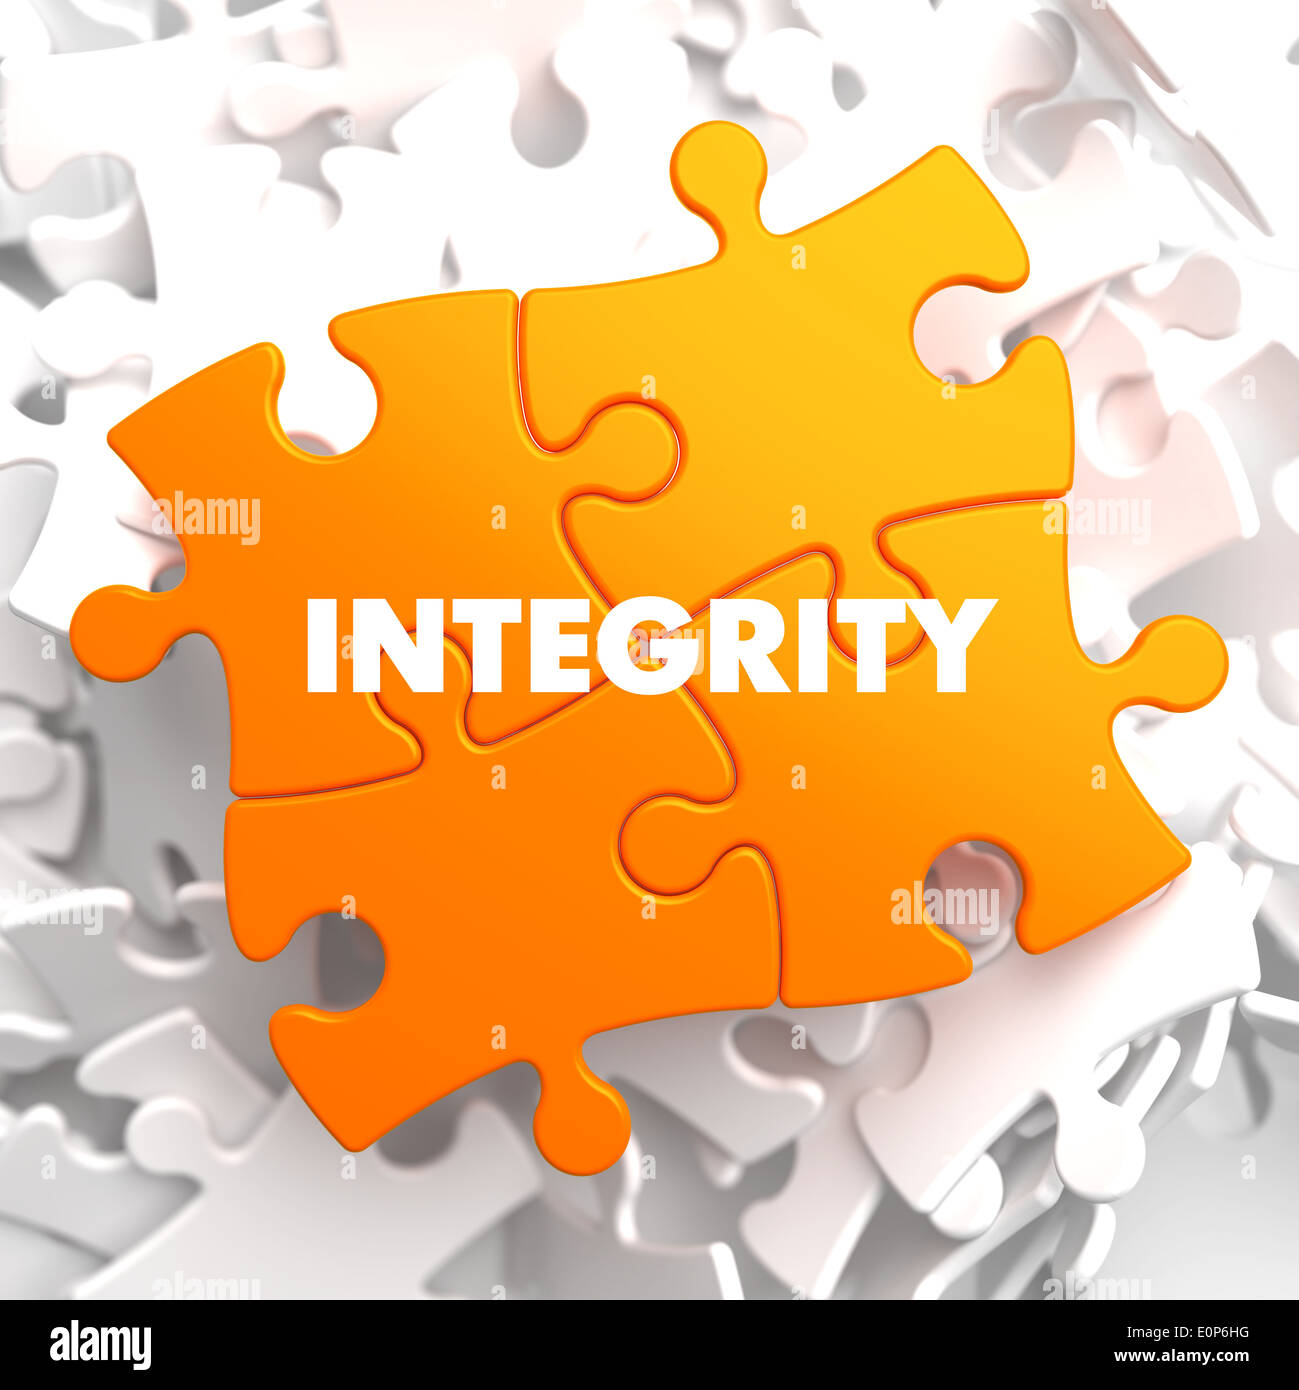 Integrity on Orange Puzzle. Stock Photo